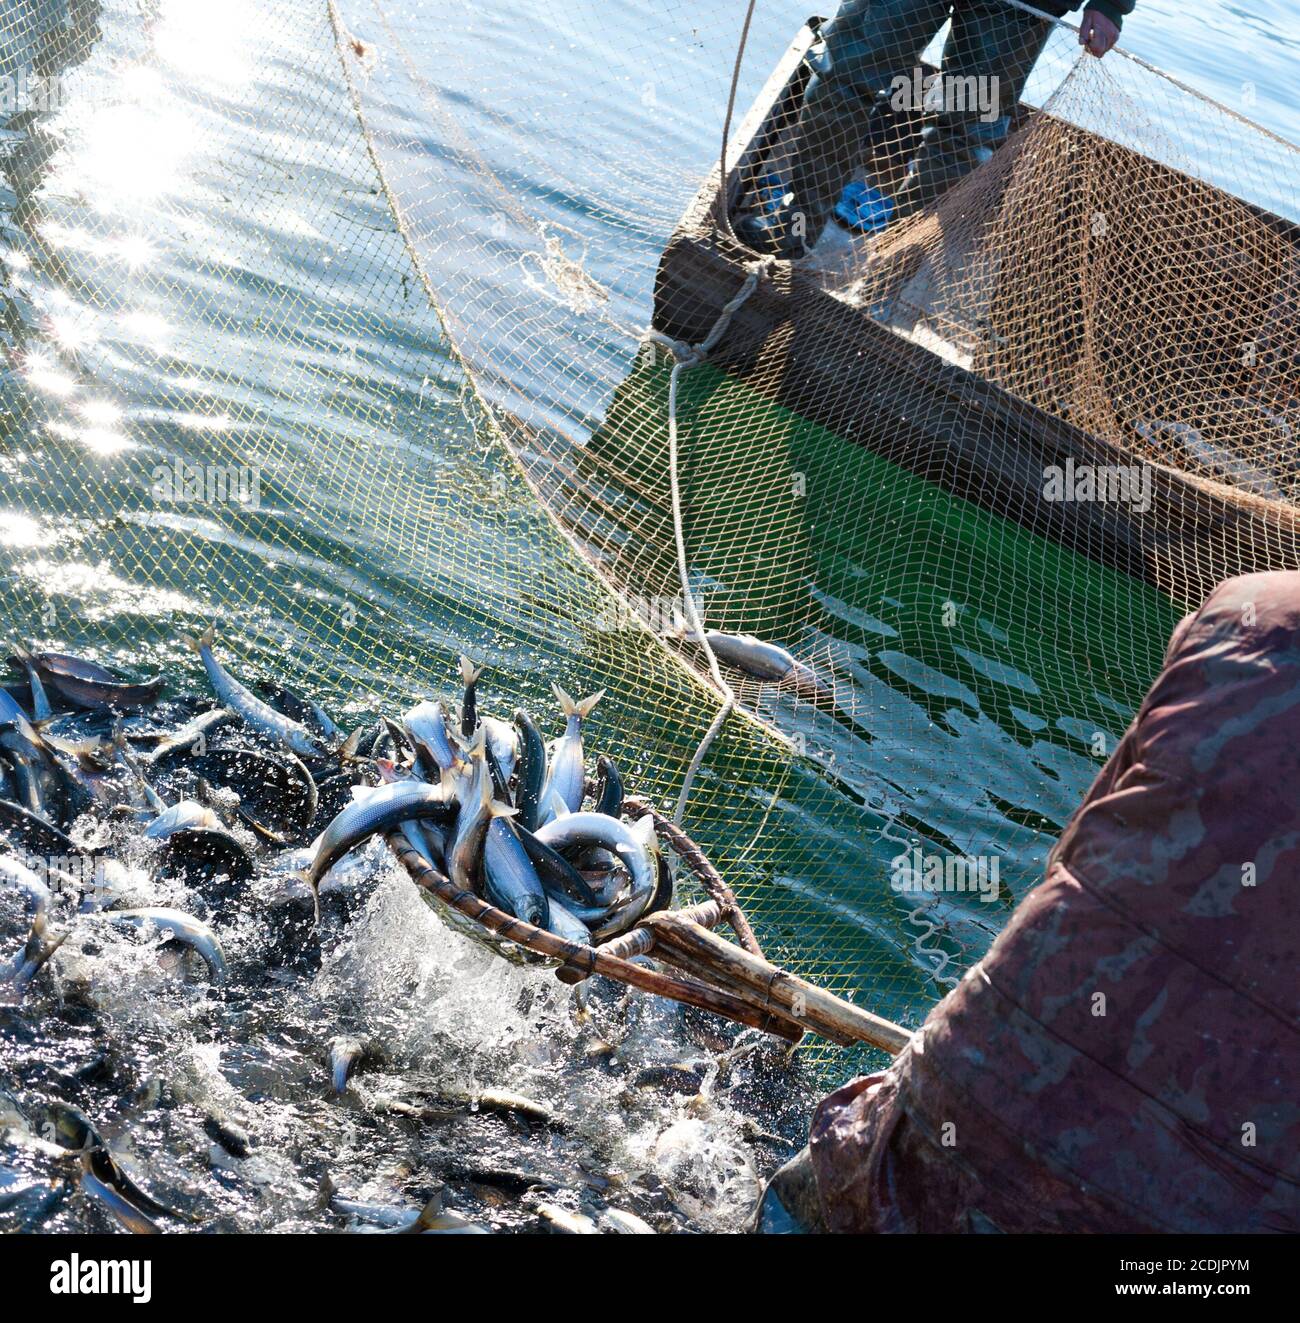 Fisherman desk stock image. Image of scoopnet, fishnet - 75502151